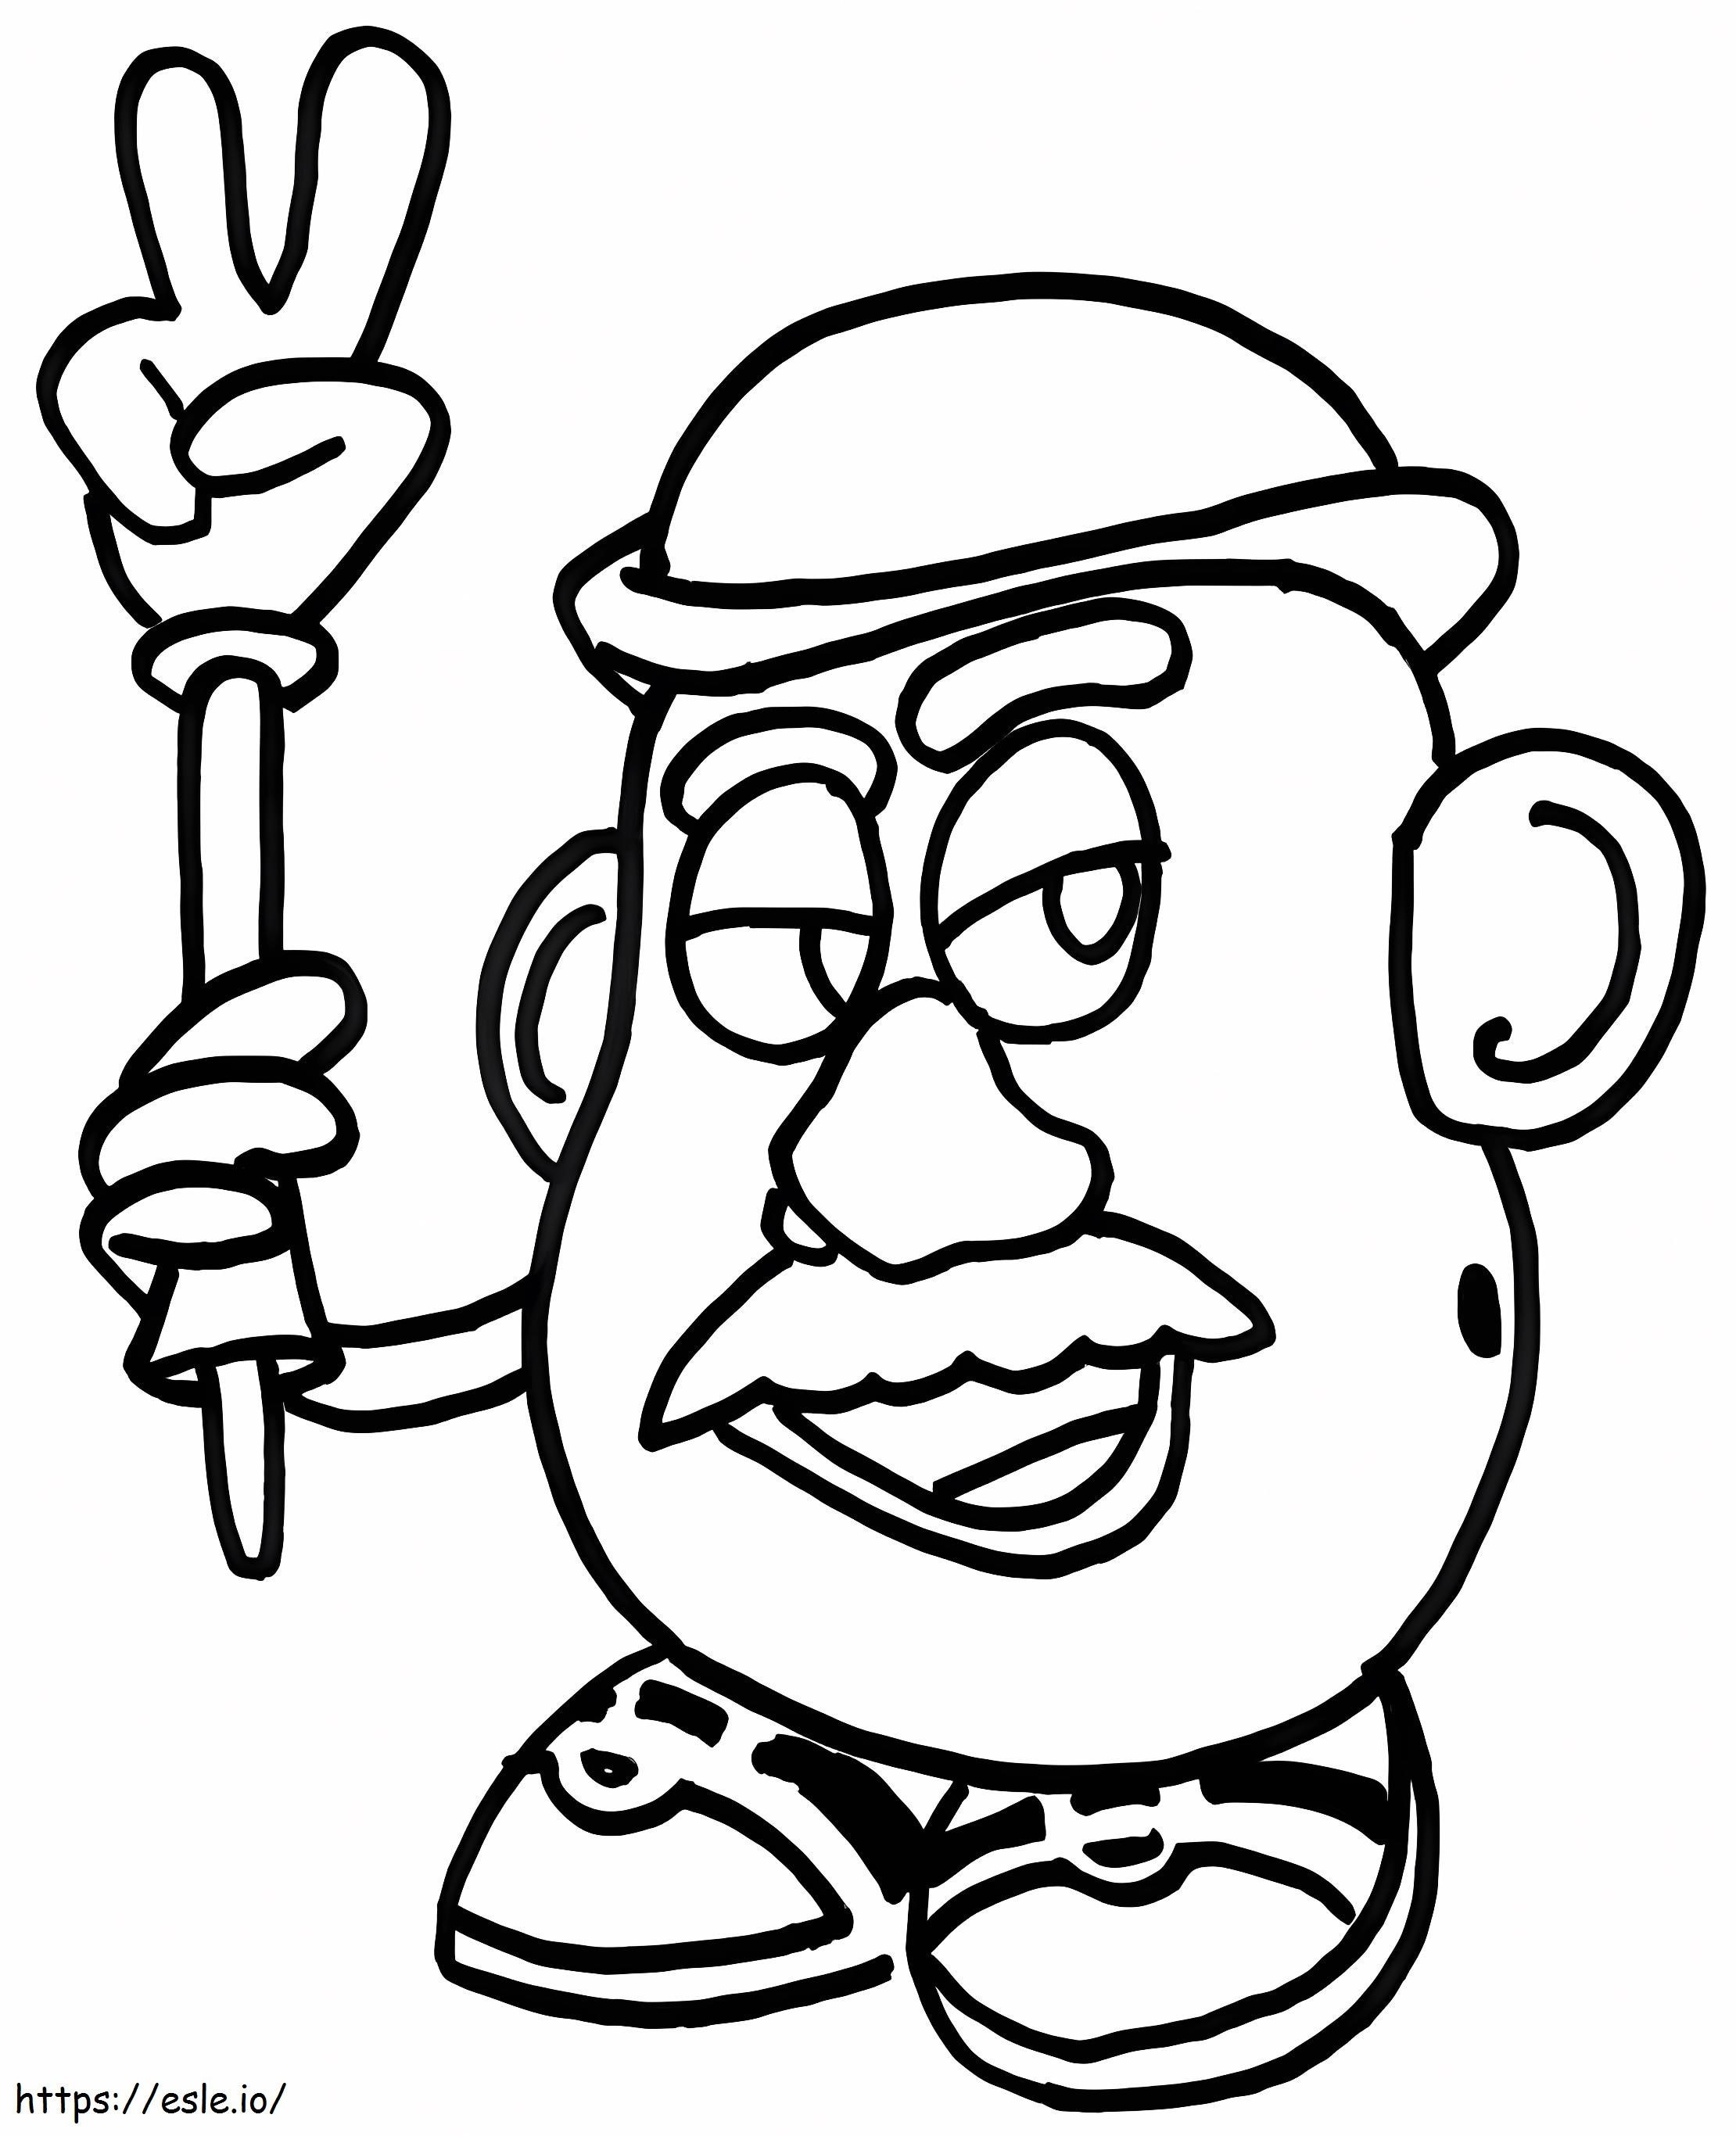 Free Mr. Potato Head To Color coloring page